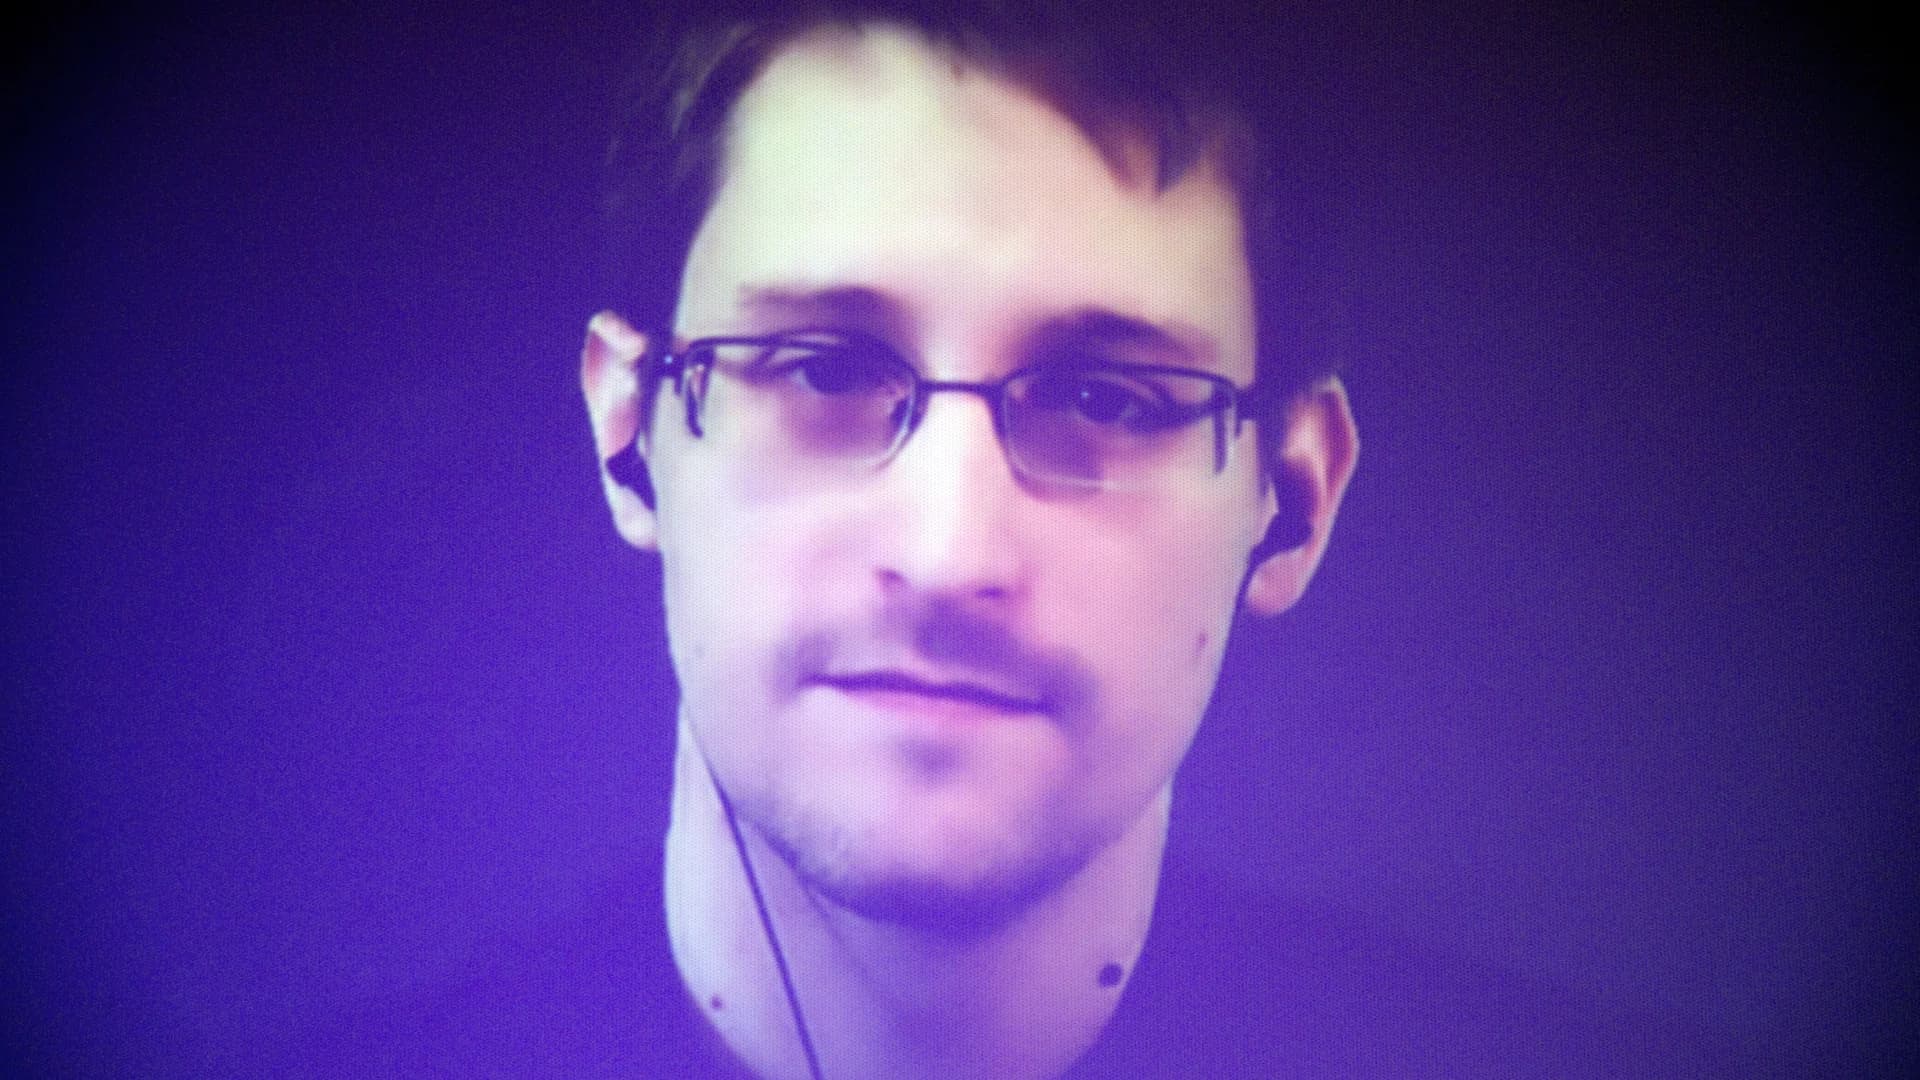 Putin grants Russian citizenship to Edward Snowden